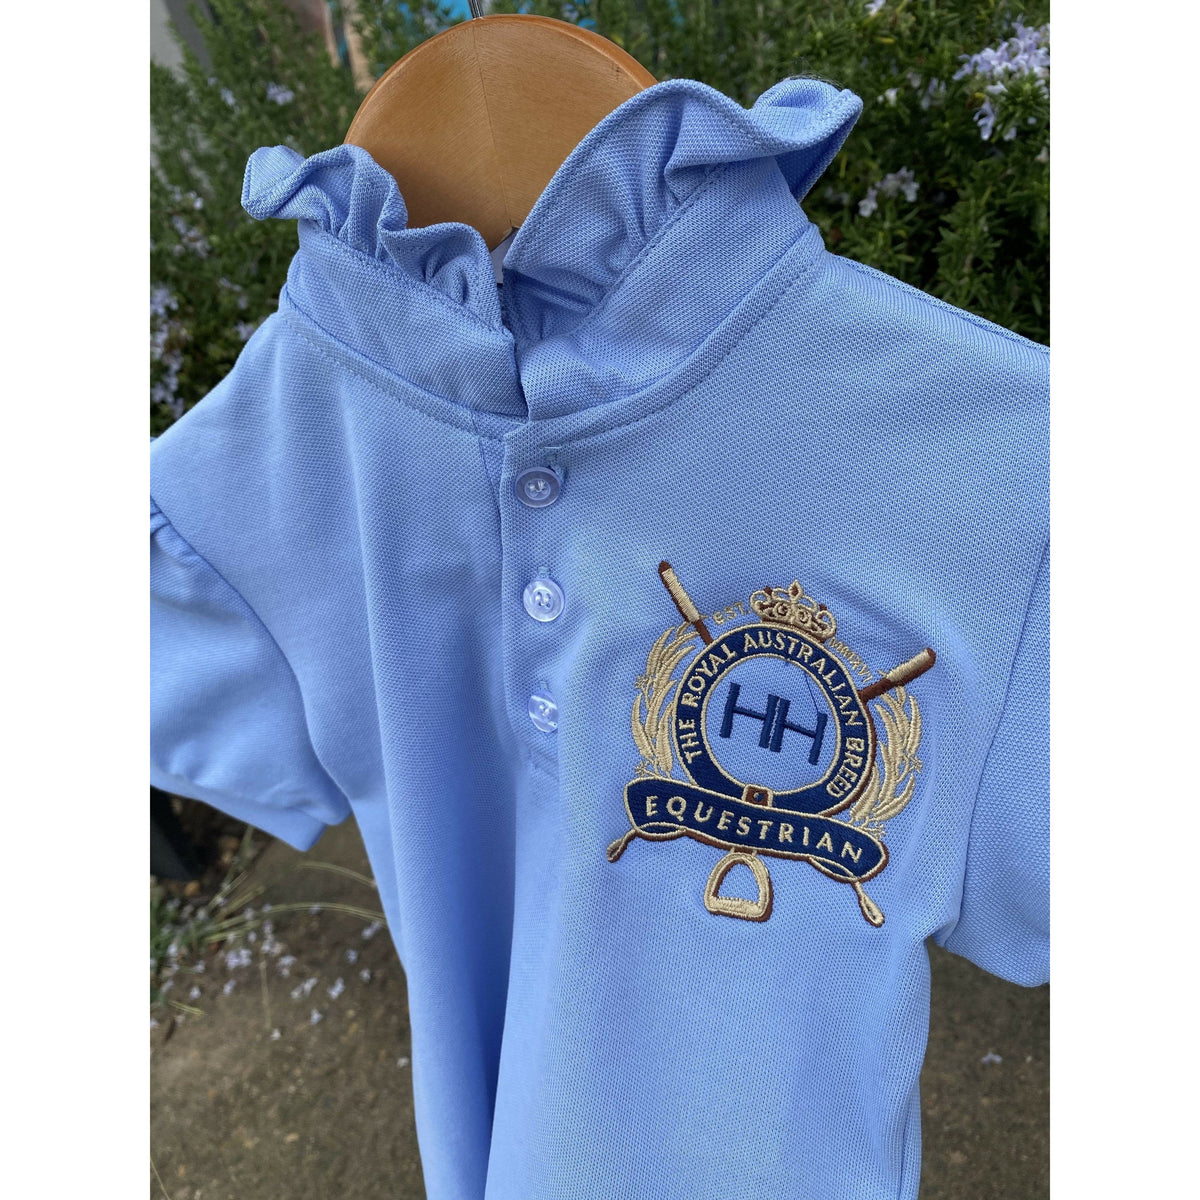 HAMPTON & HARLOW CLOTHING Hampton & Harlow Girls Sky Blue Polo